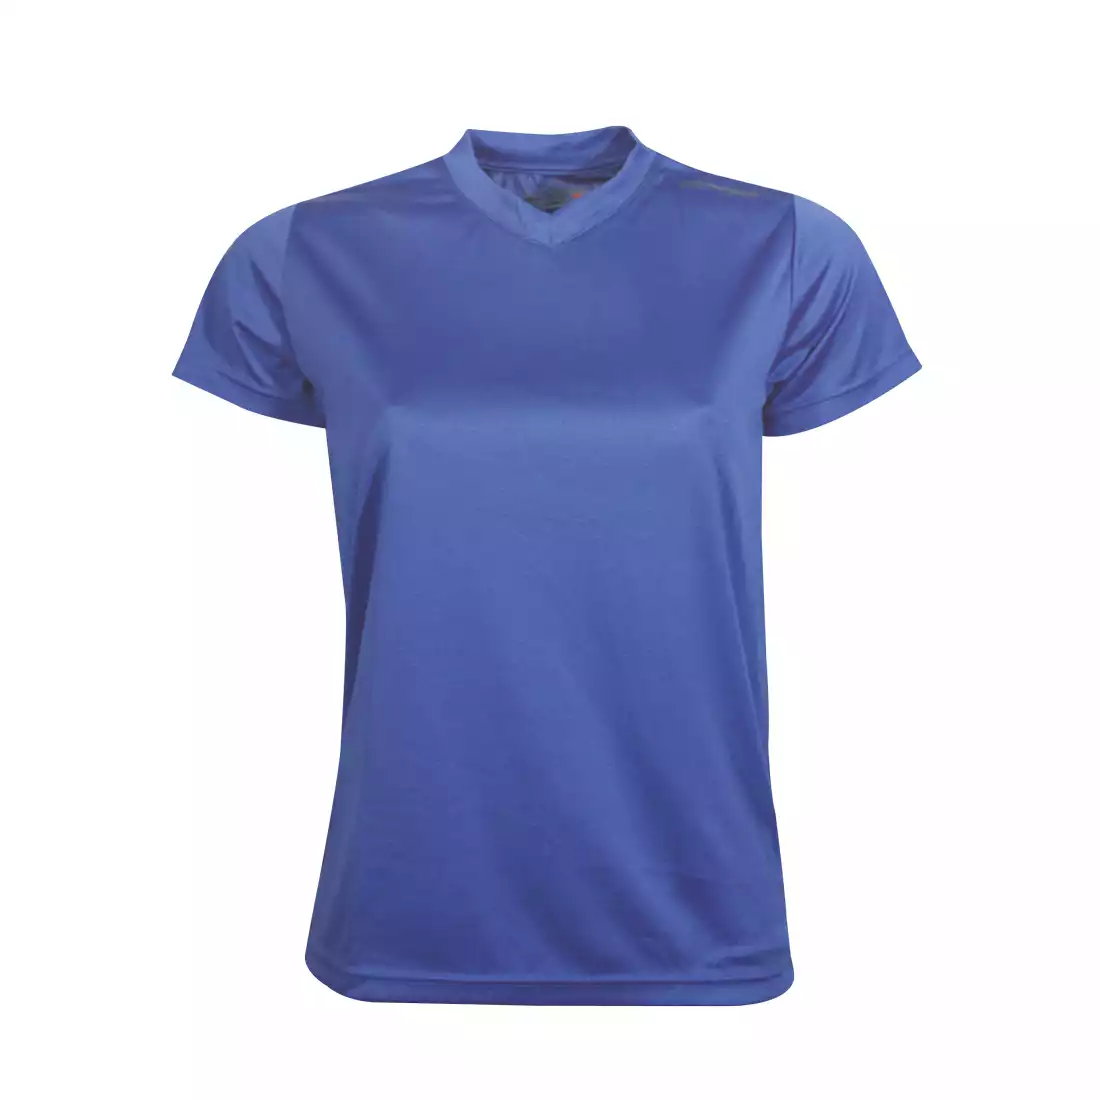 NEWLINE BASE COOL T-SHIRT - damska koszulka do biegania 13614-11